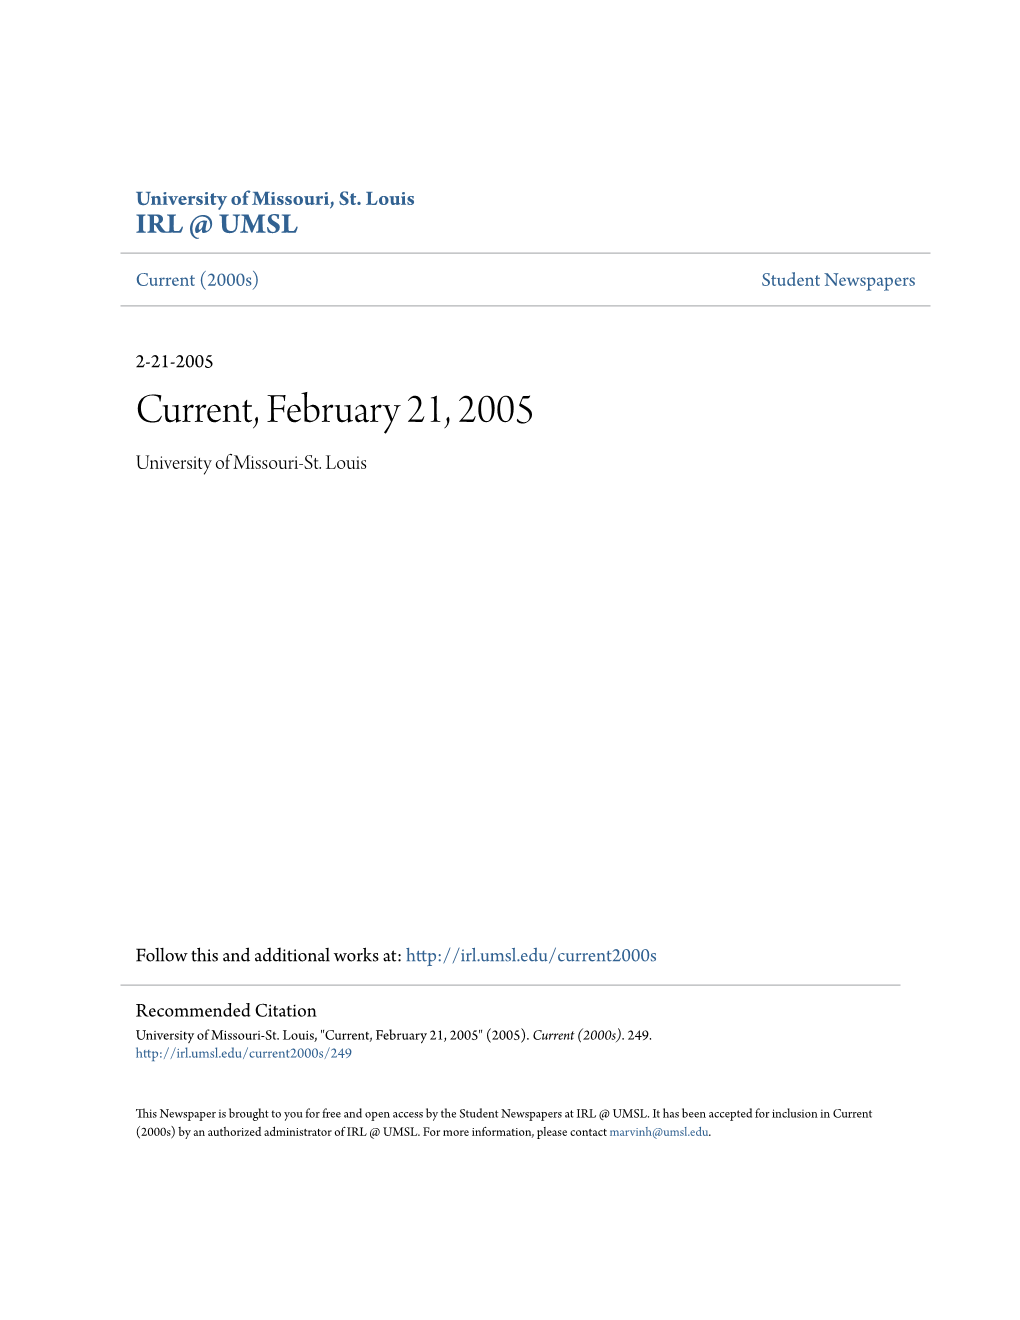 Current, February 21, 2005 University of Missouri-St